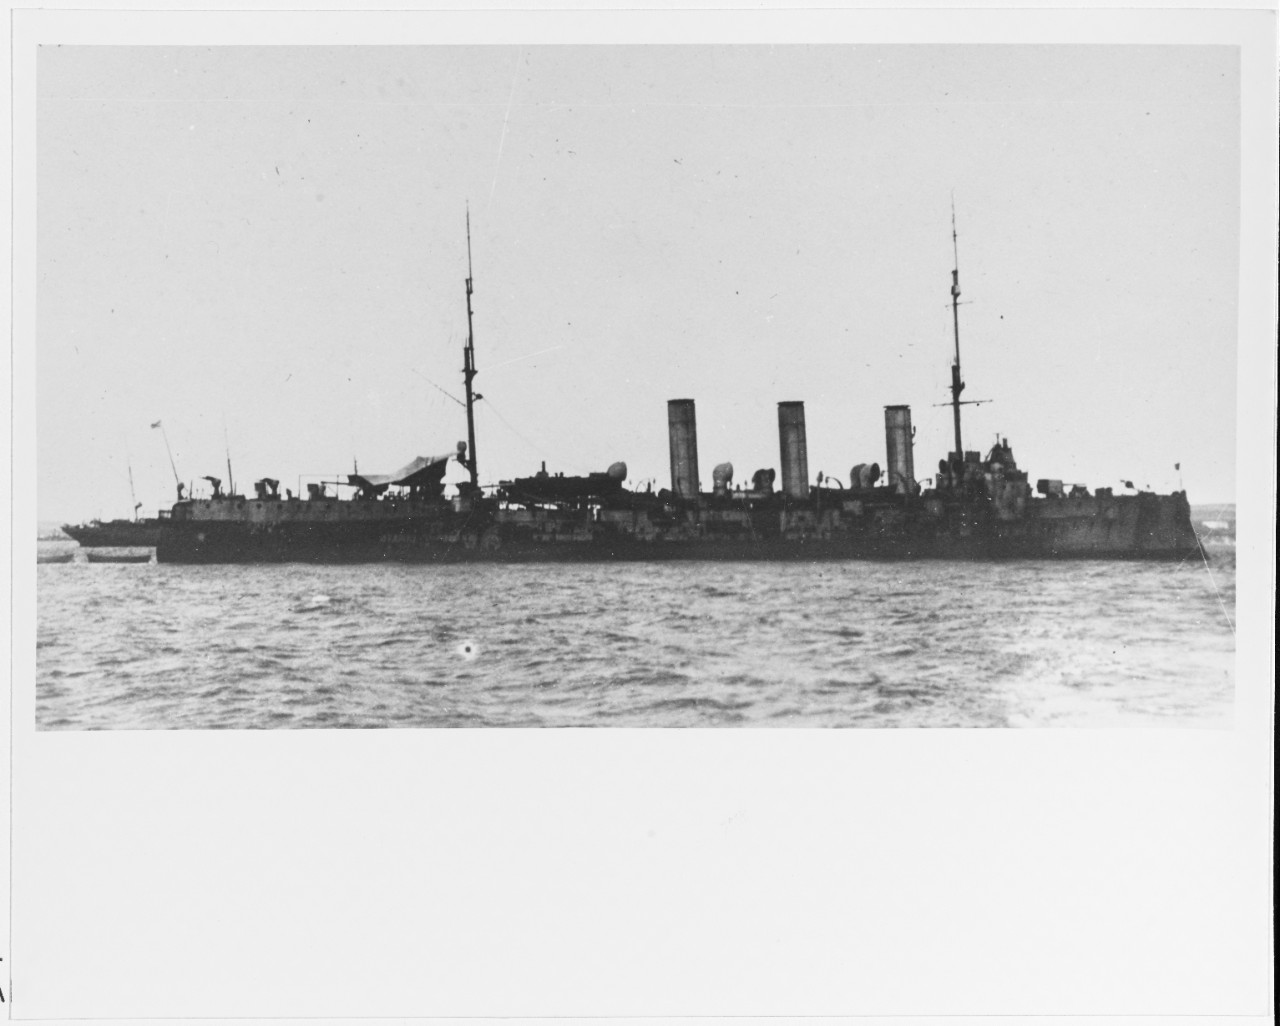 GENERAL KORNILOV (Russian protected cruiser, 1902-1932)